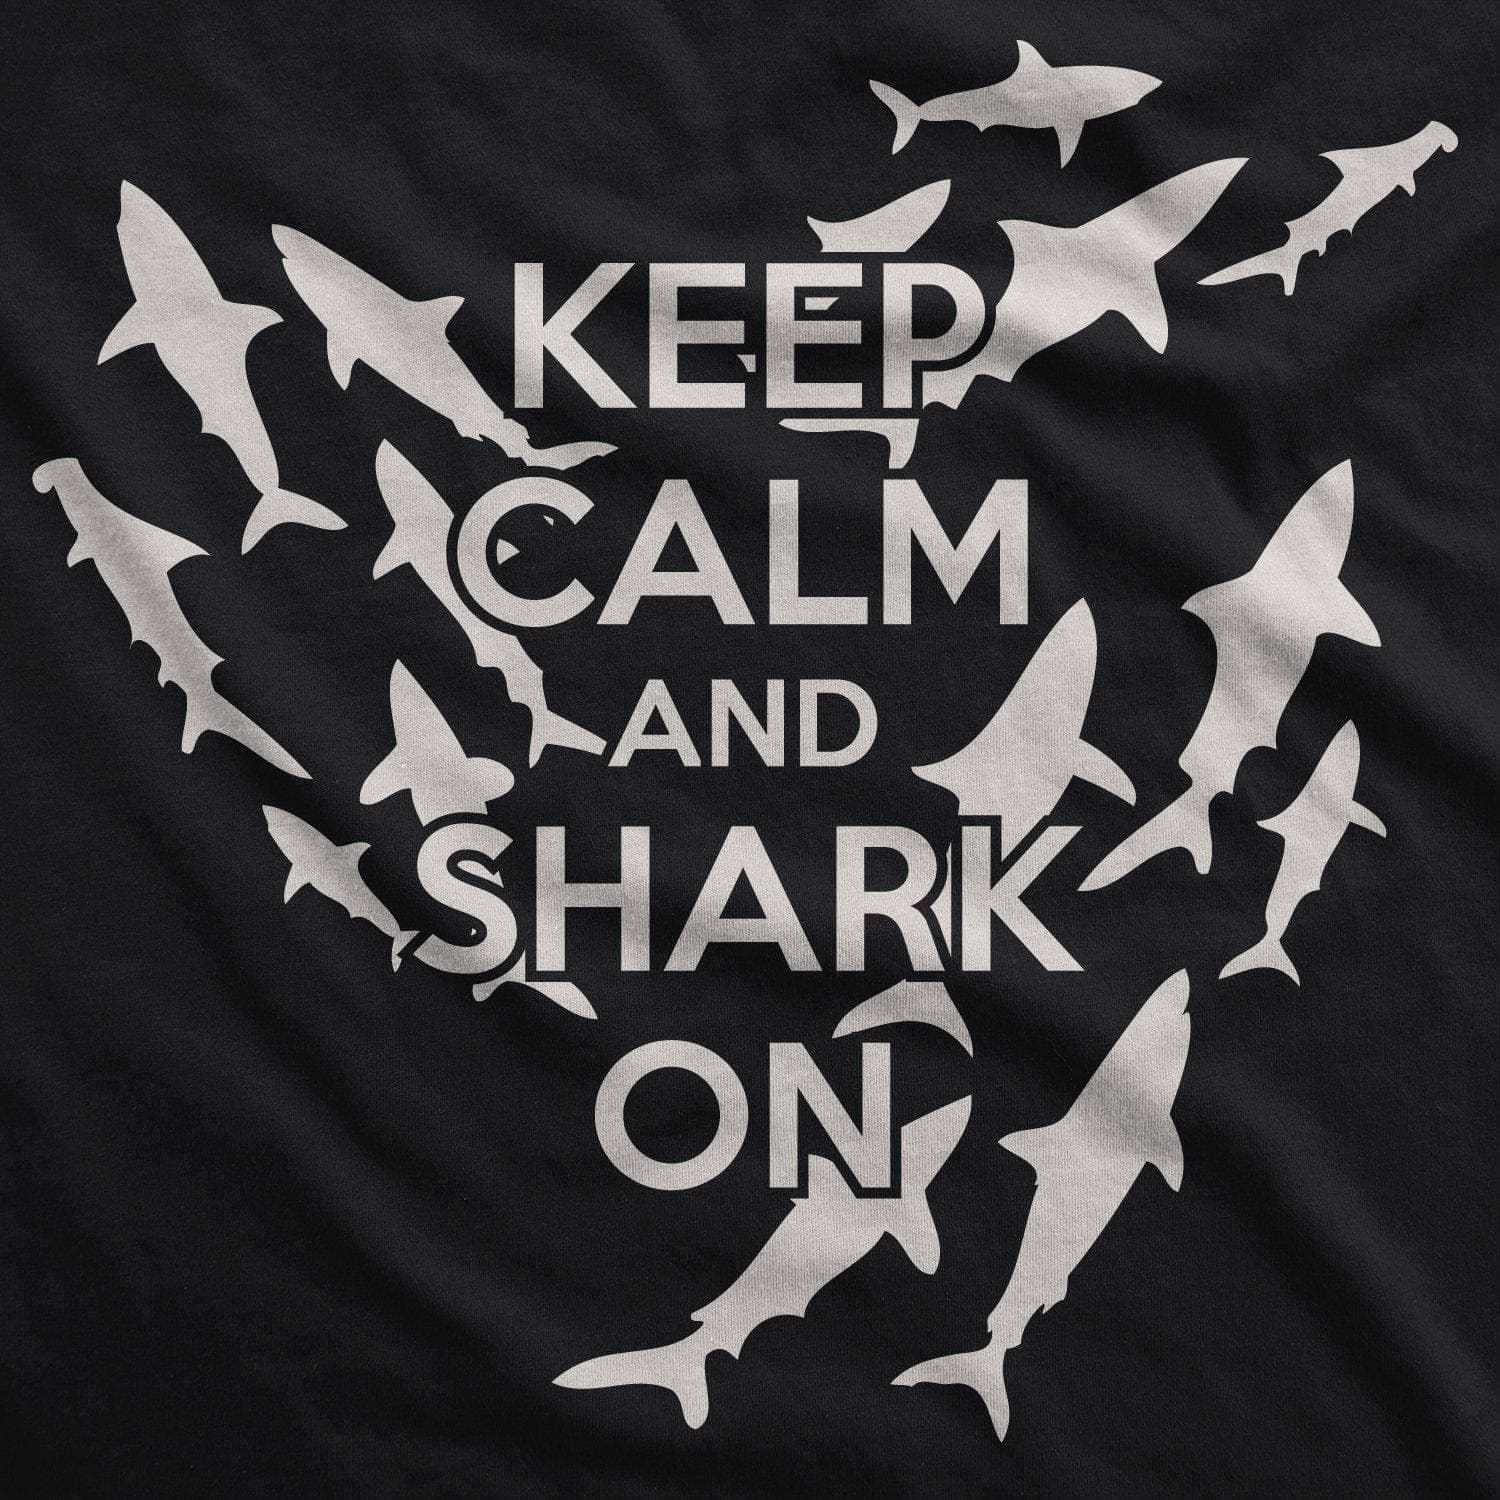 Keep Calm And Shark On Men's Tshirt - Crazy Dog T-Shirts